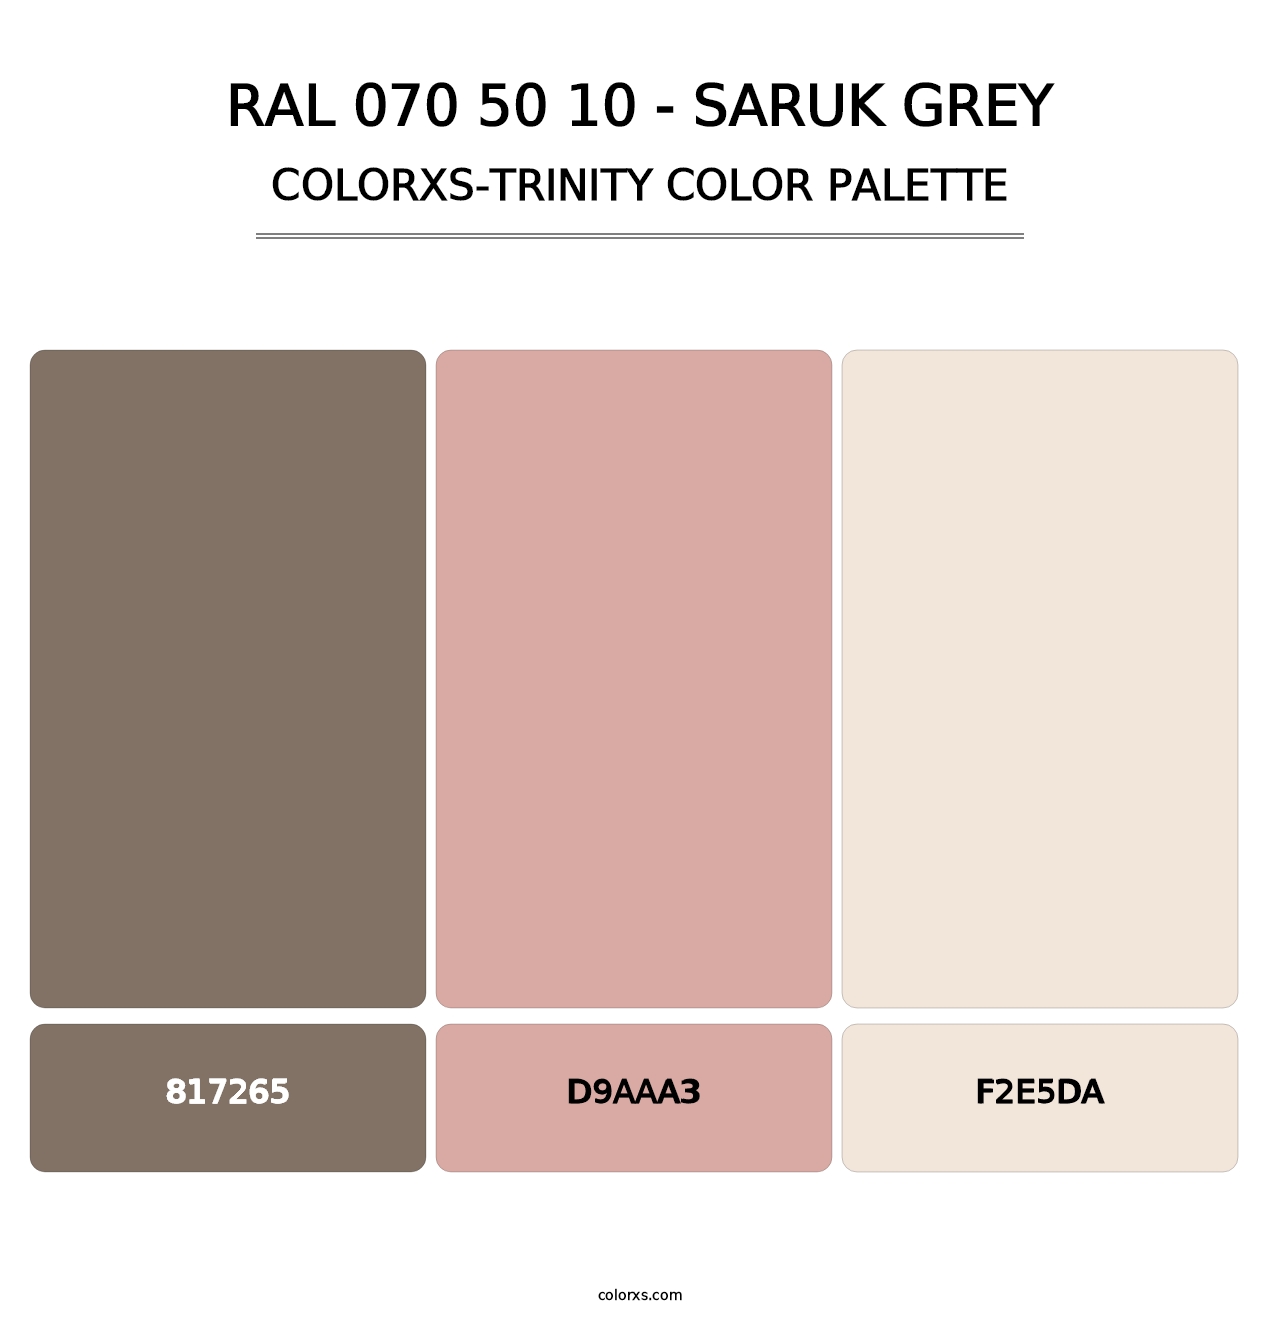 RAL 070 50 10 - Saruk Grey - Colorxs Trinity Palette